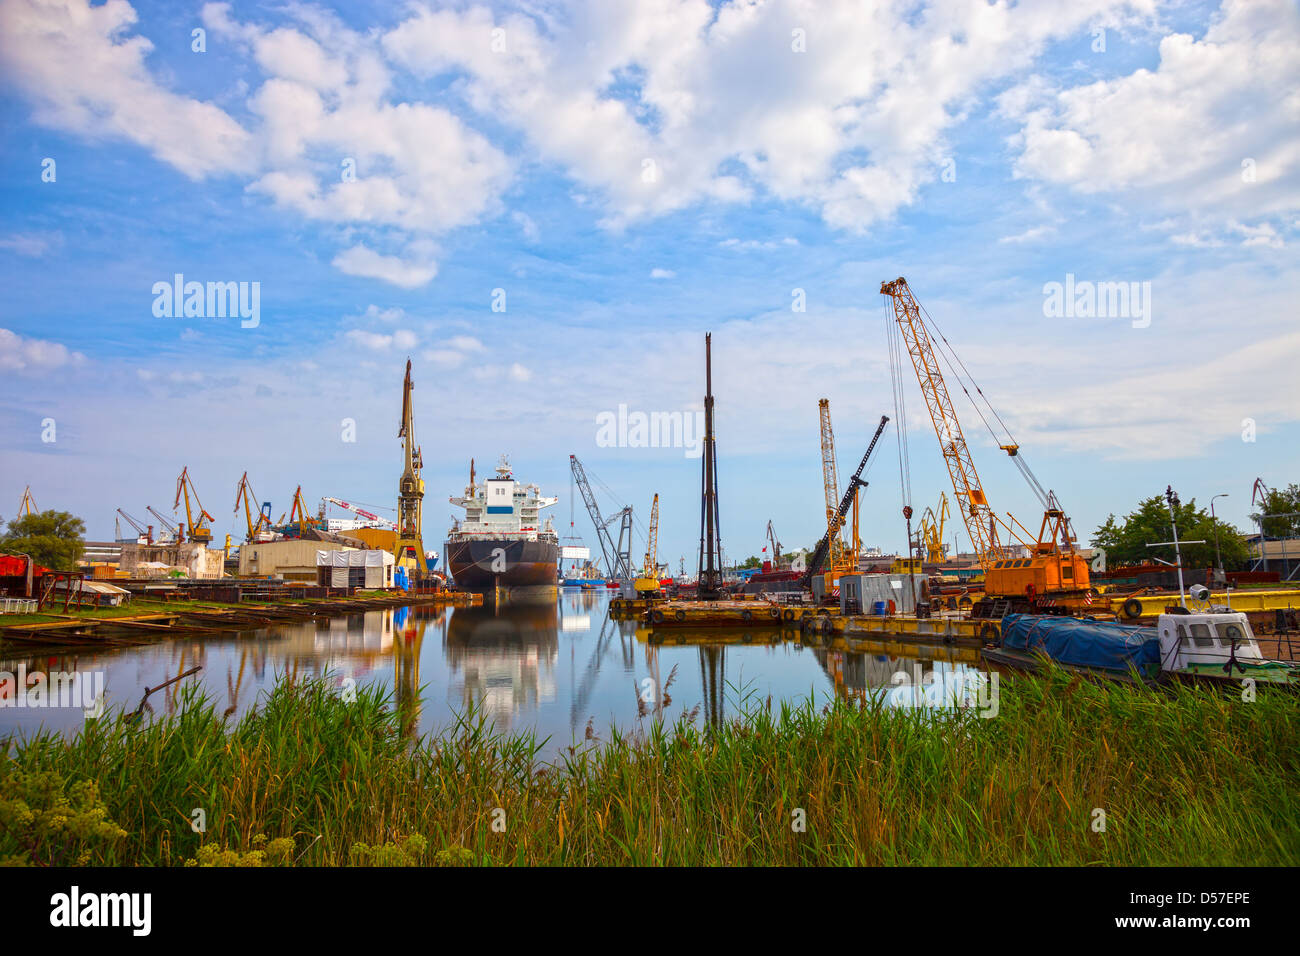 Heavy industrial zone - Shipyard in Gdansk, Poland. Stock Photo